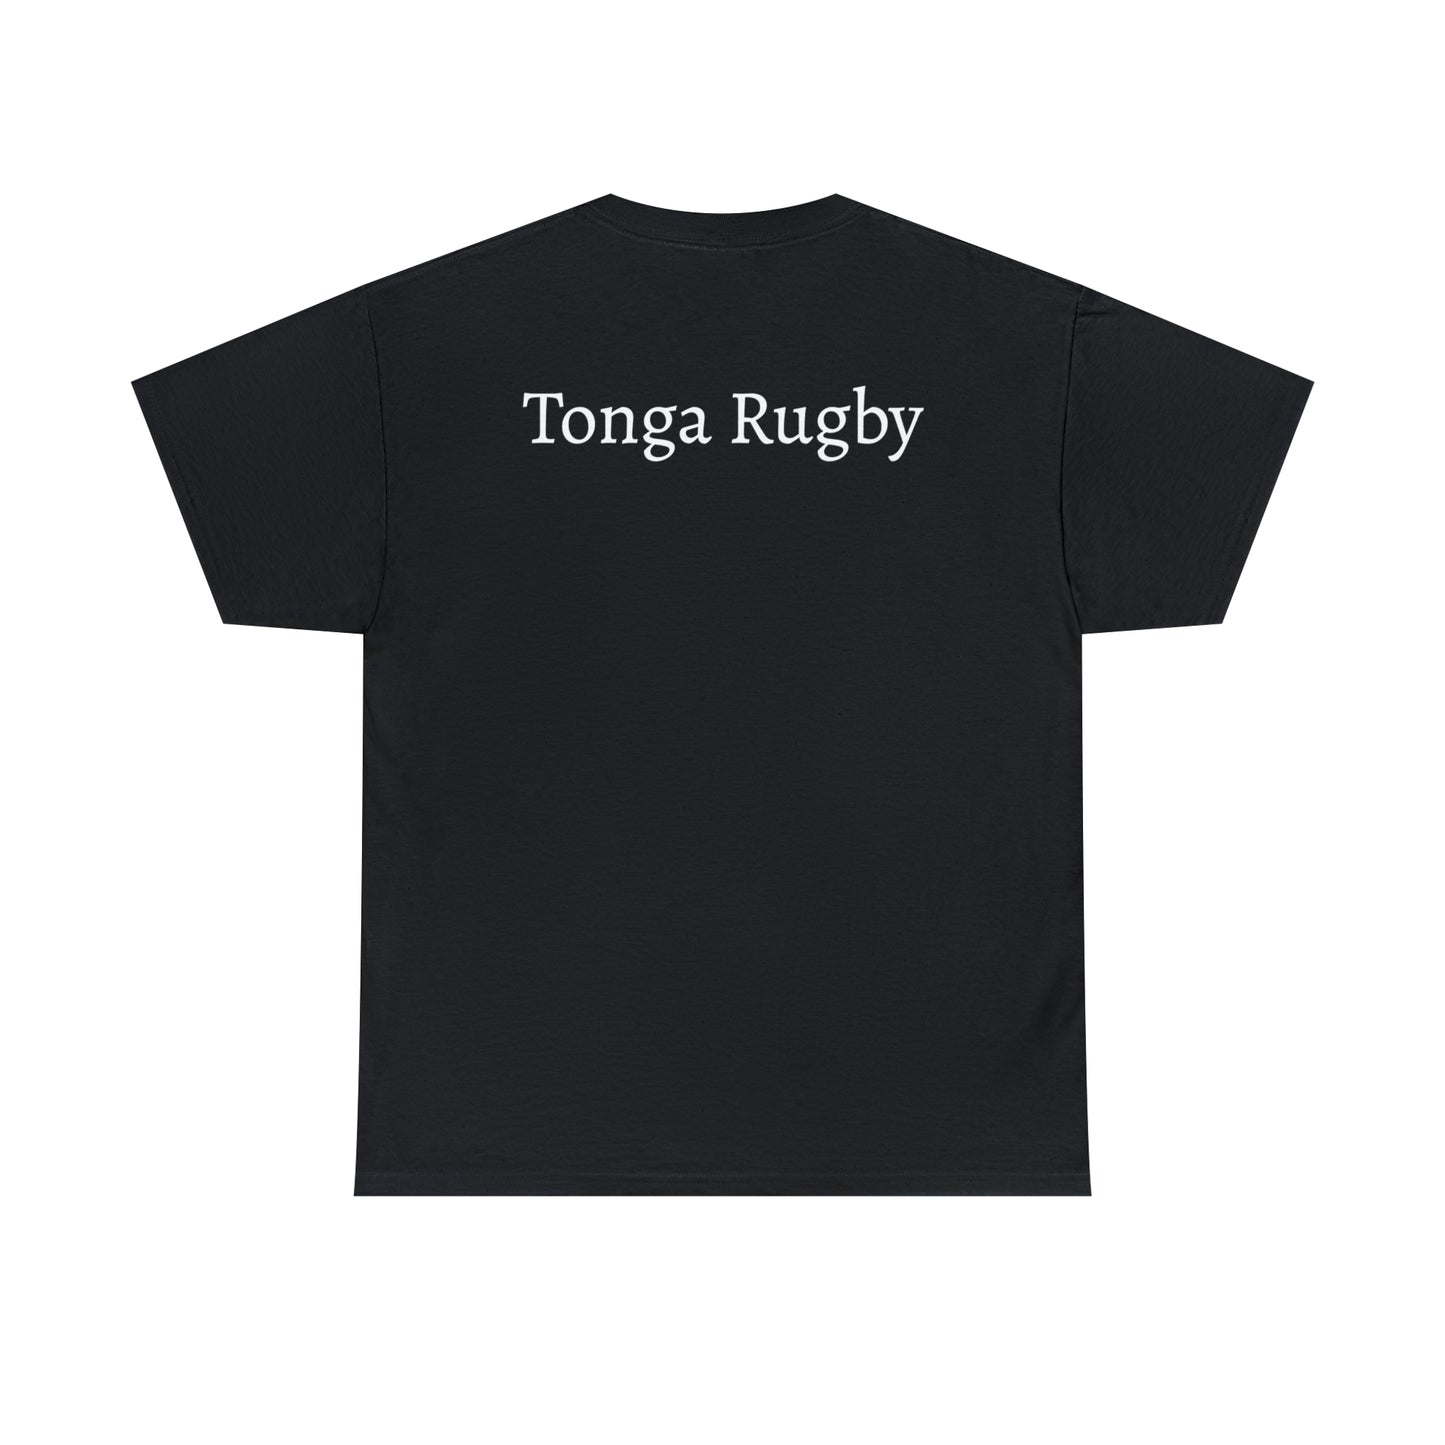 Ready Tonga - dark shirts